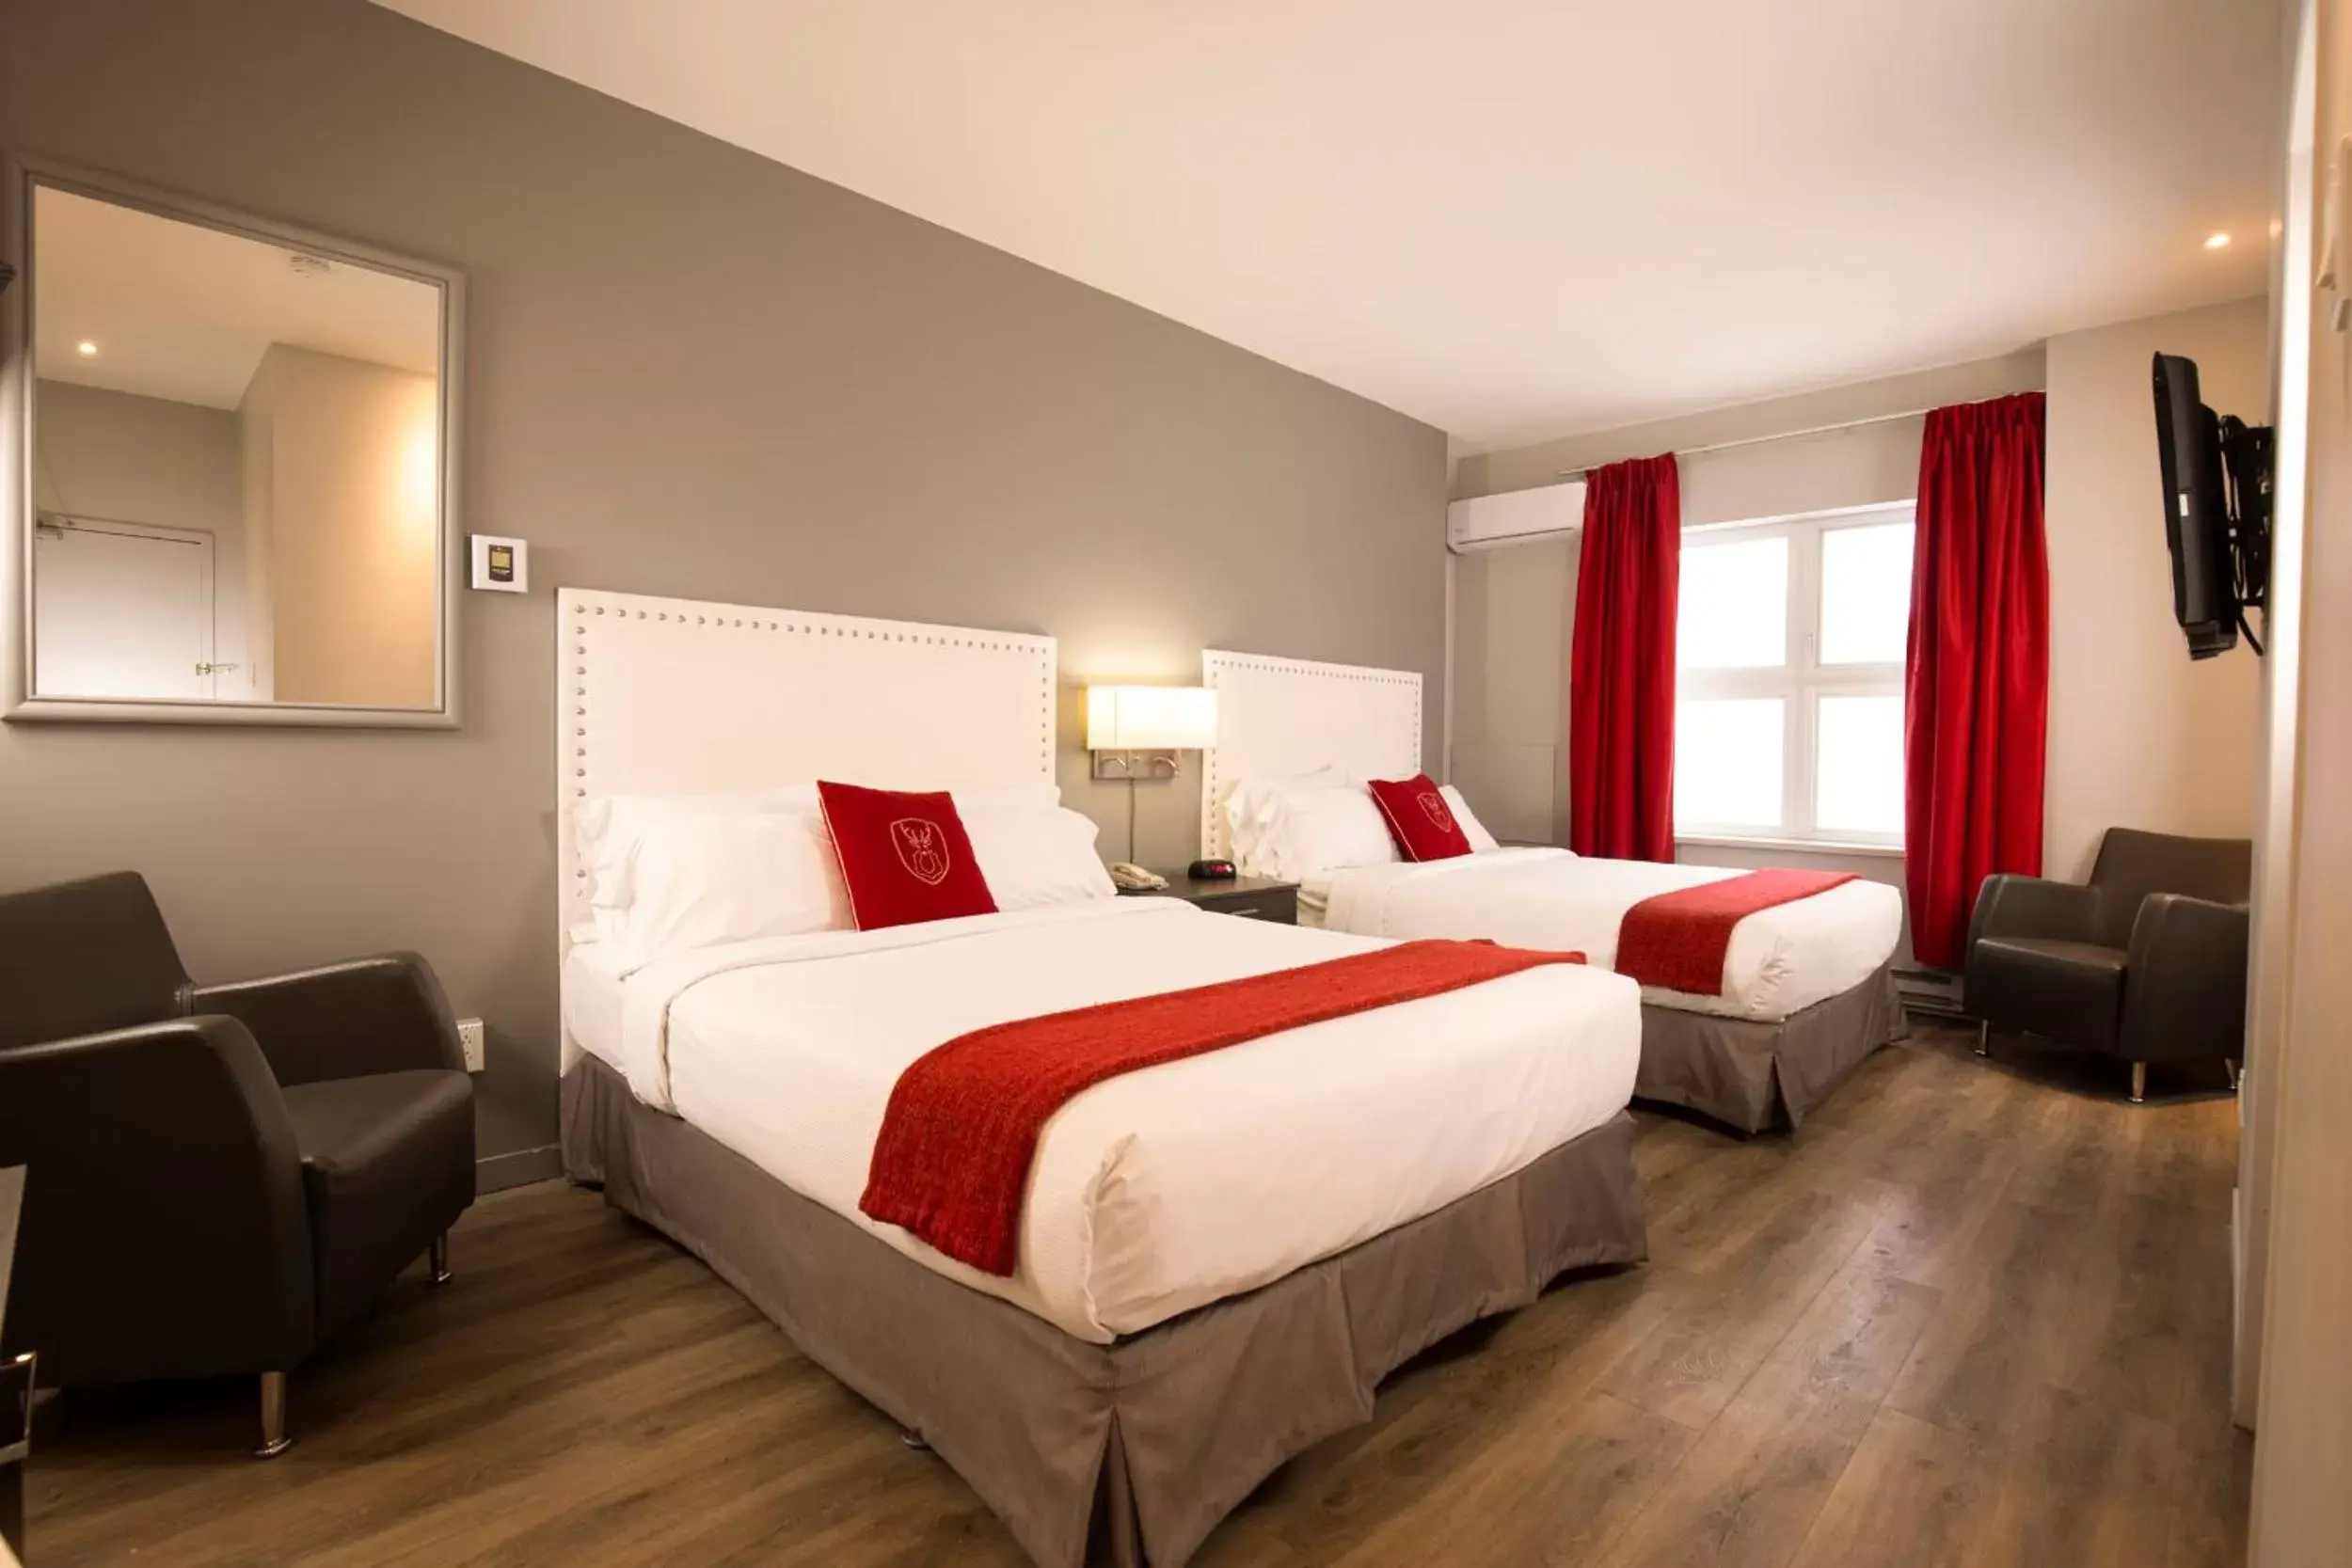 Bedroom in Hotel du Nord